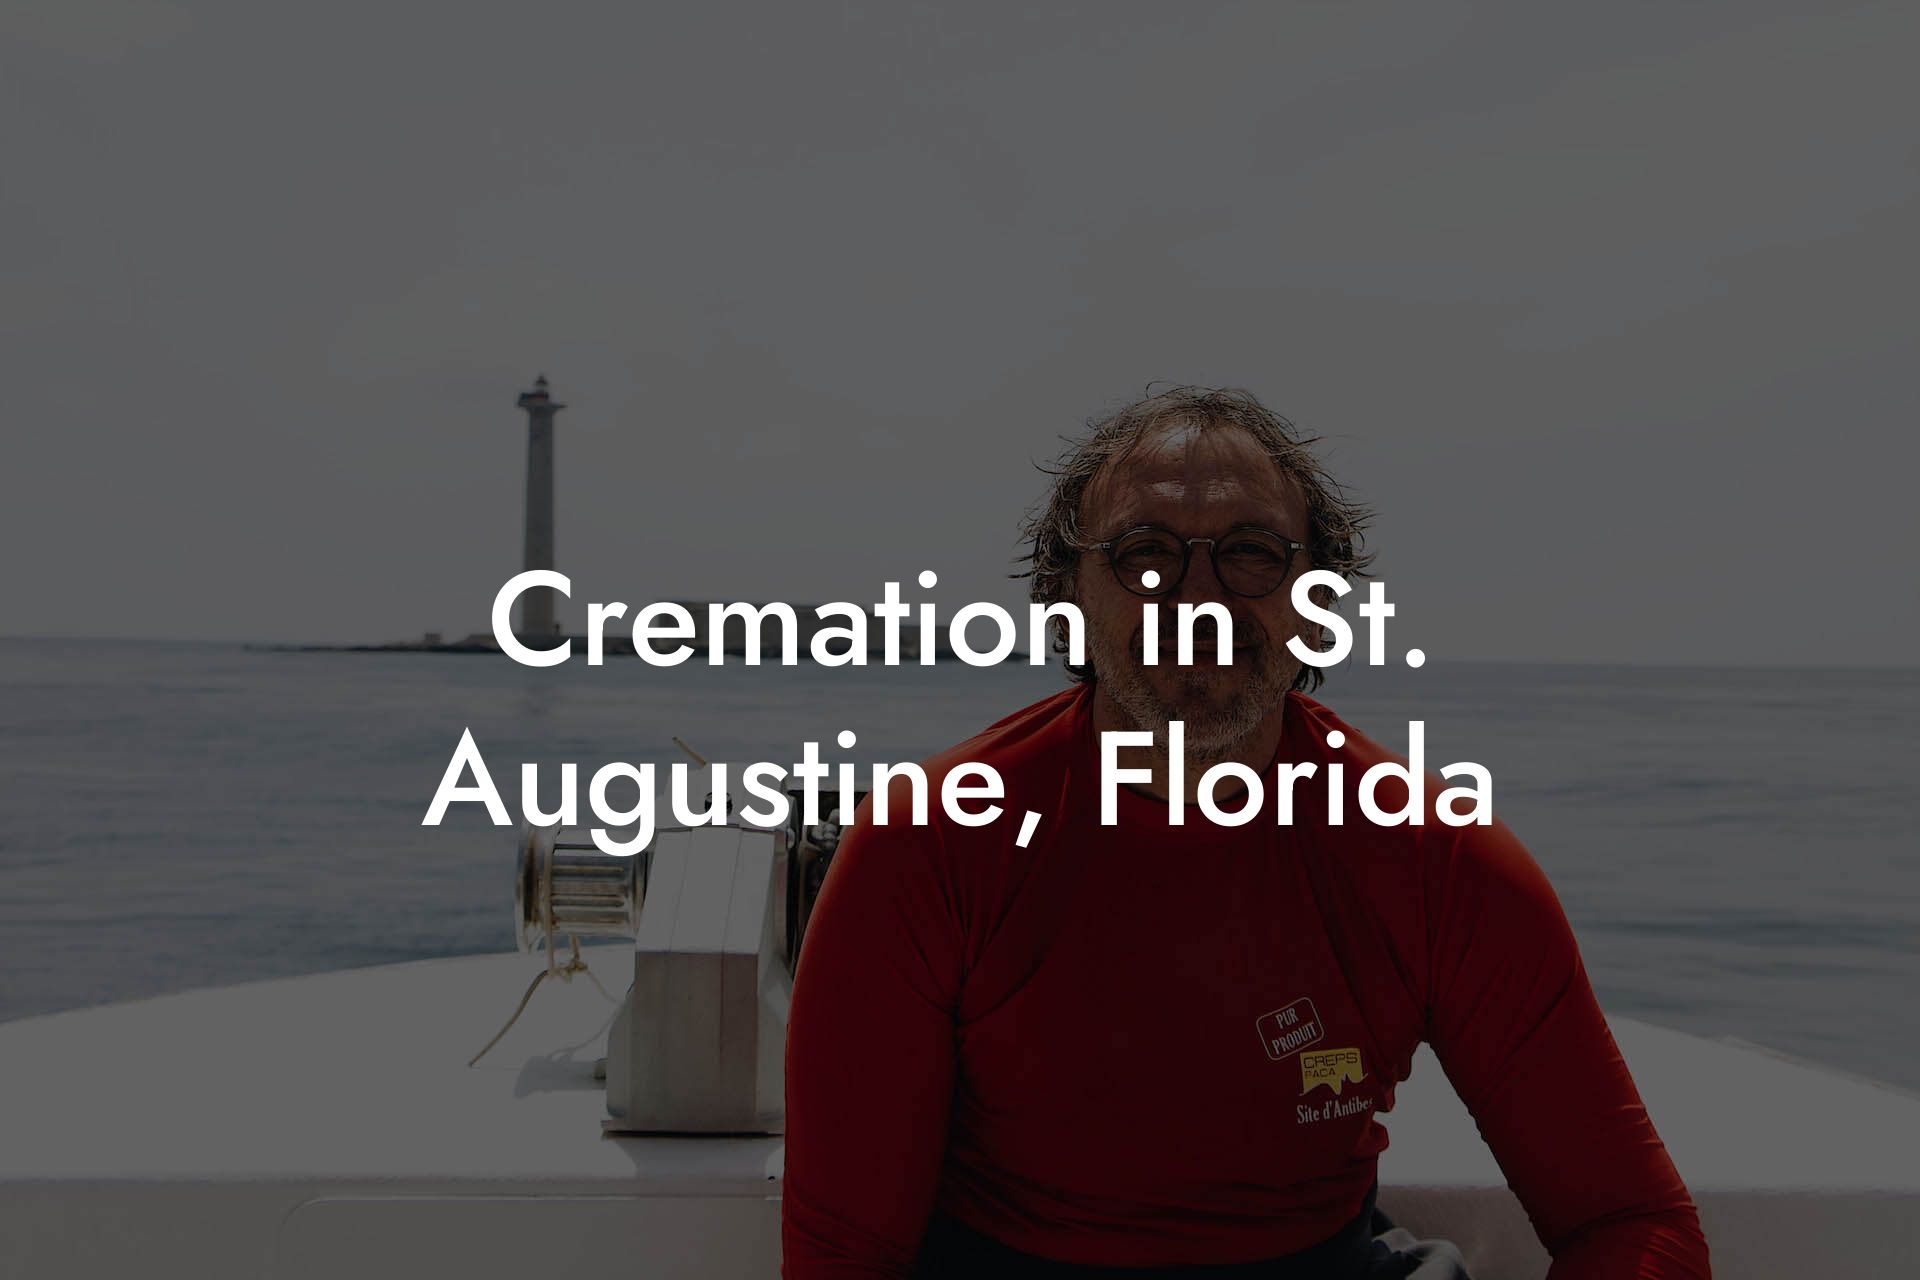 Cremation in St. Augustine, Florida